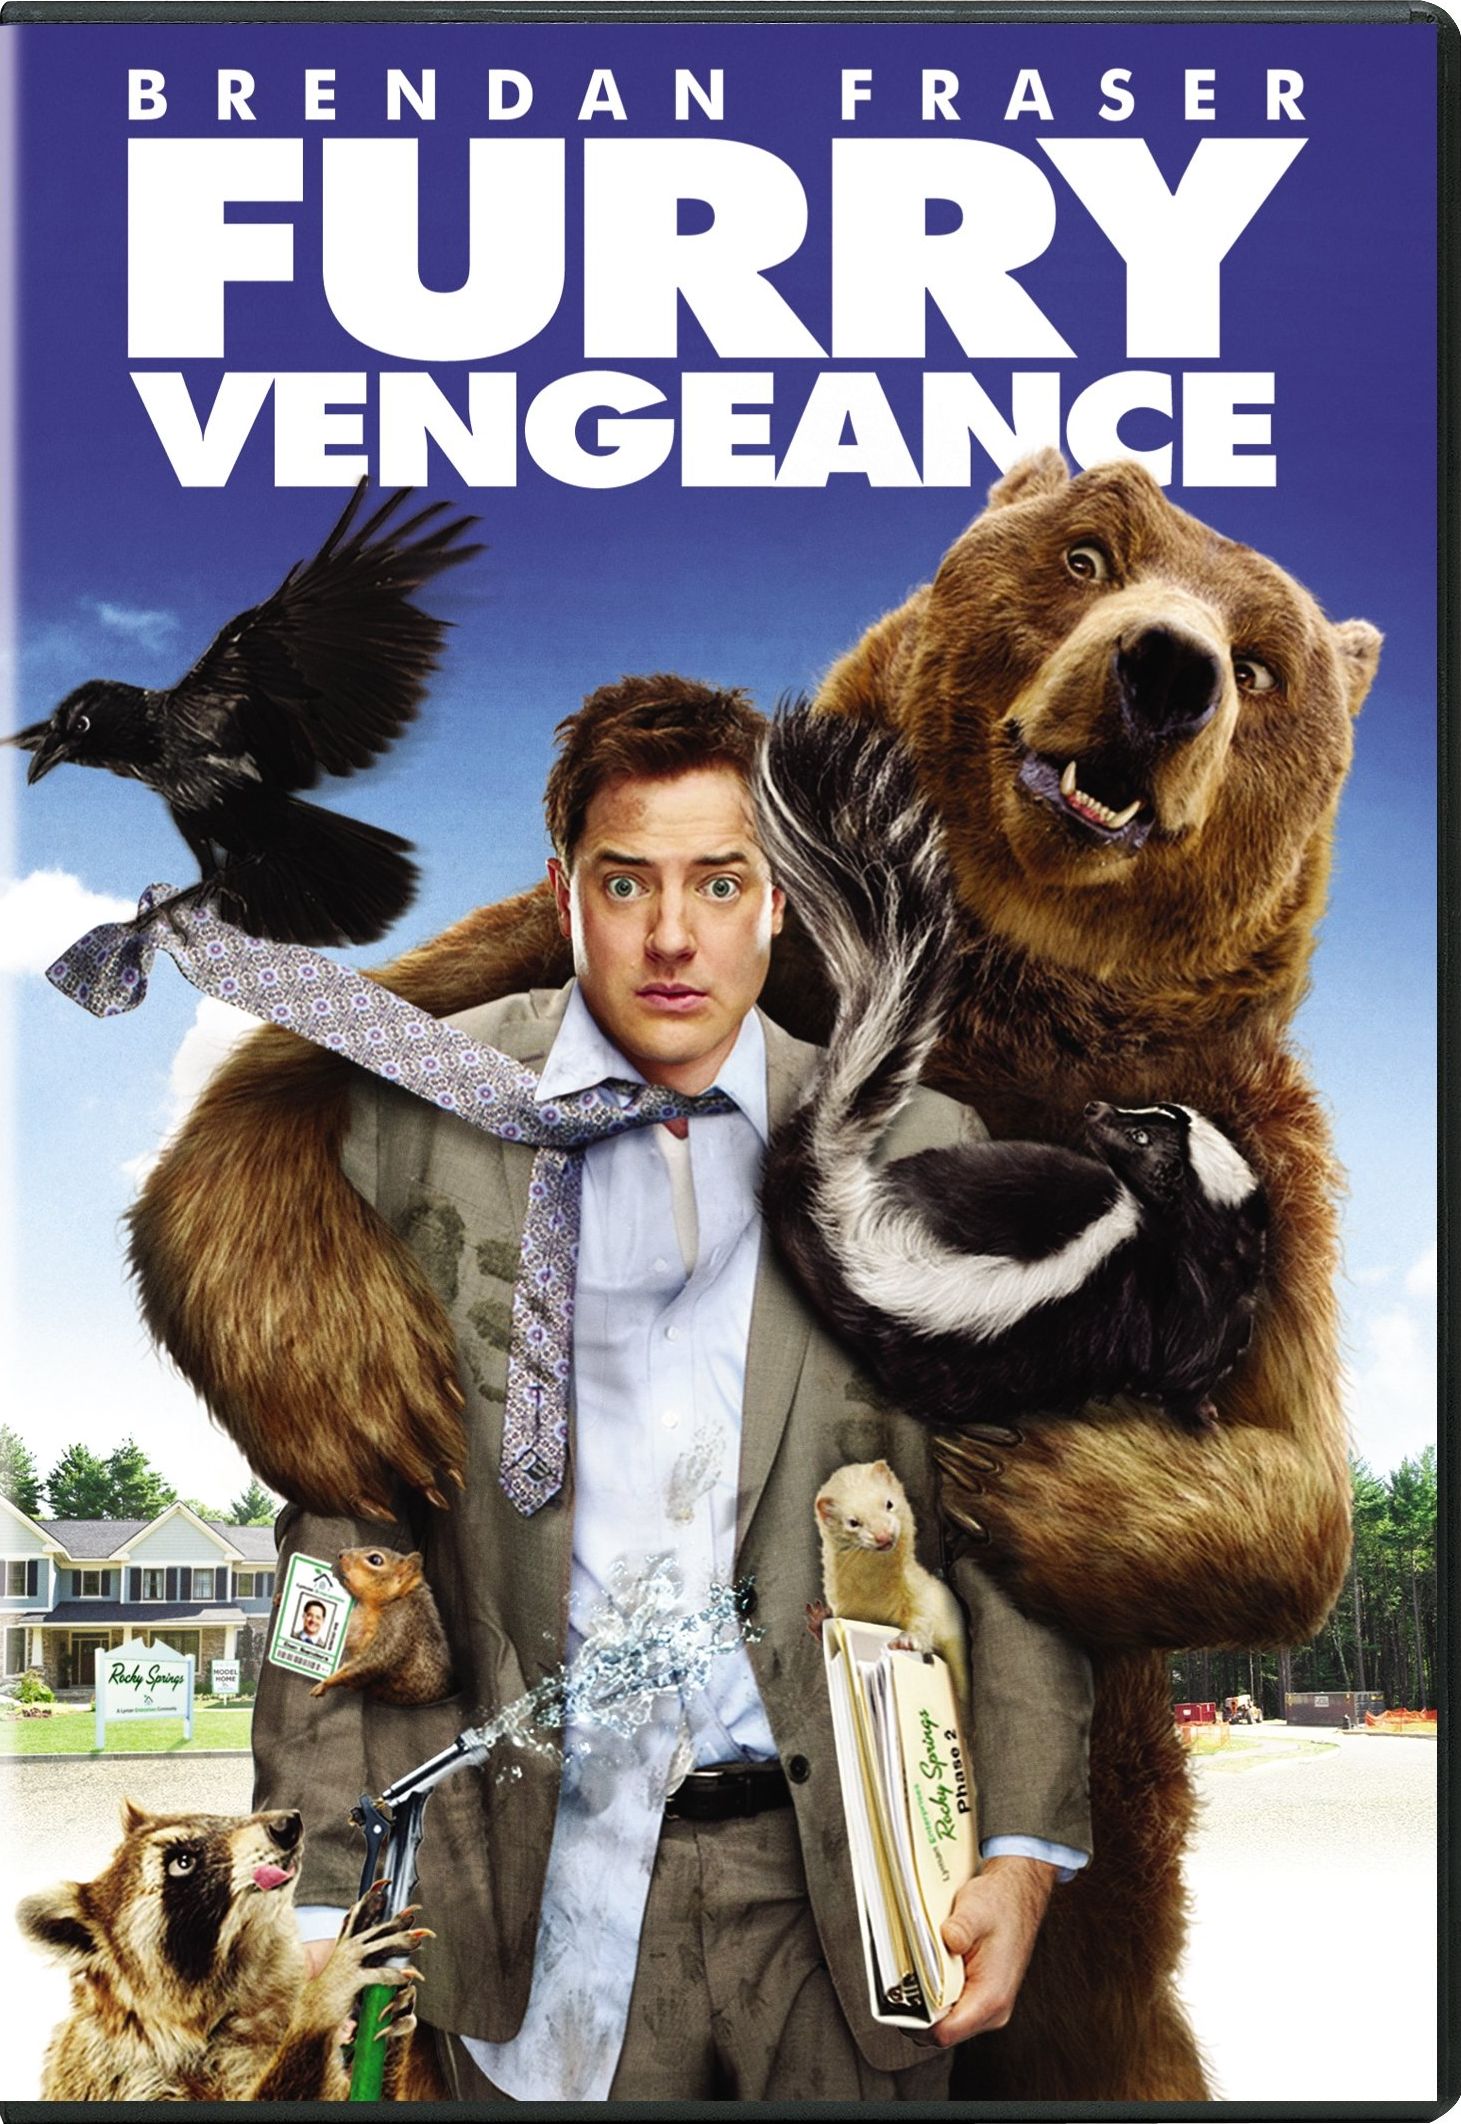 Furry Vengeance DVD Release Date August 17, 2010